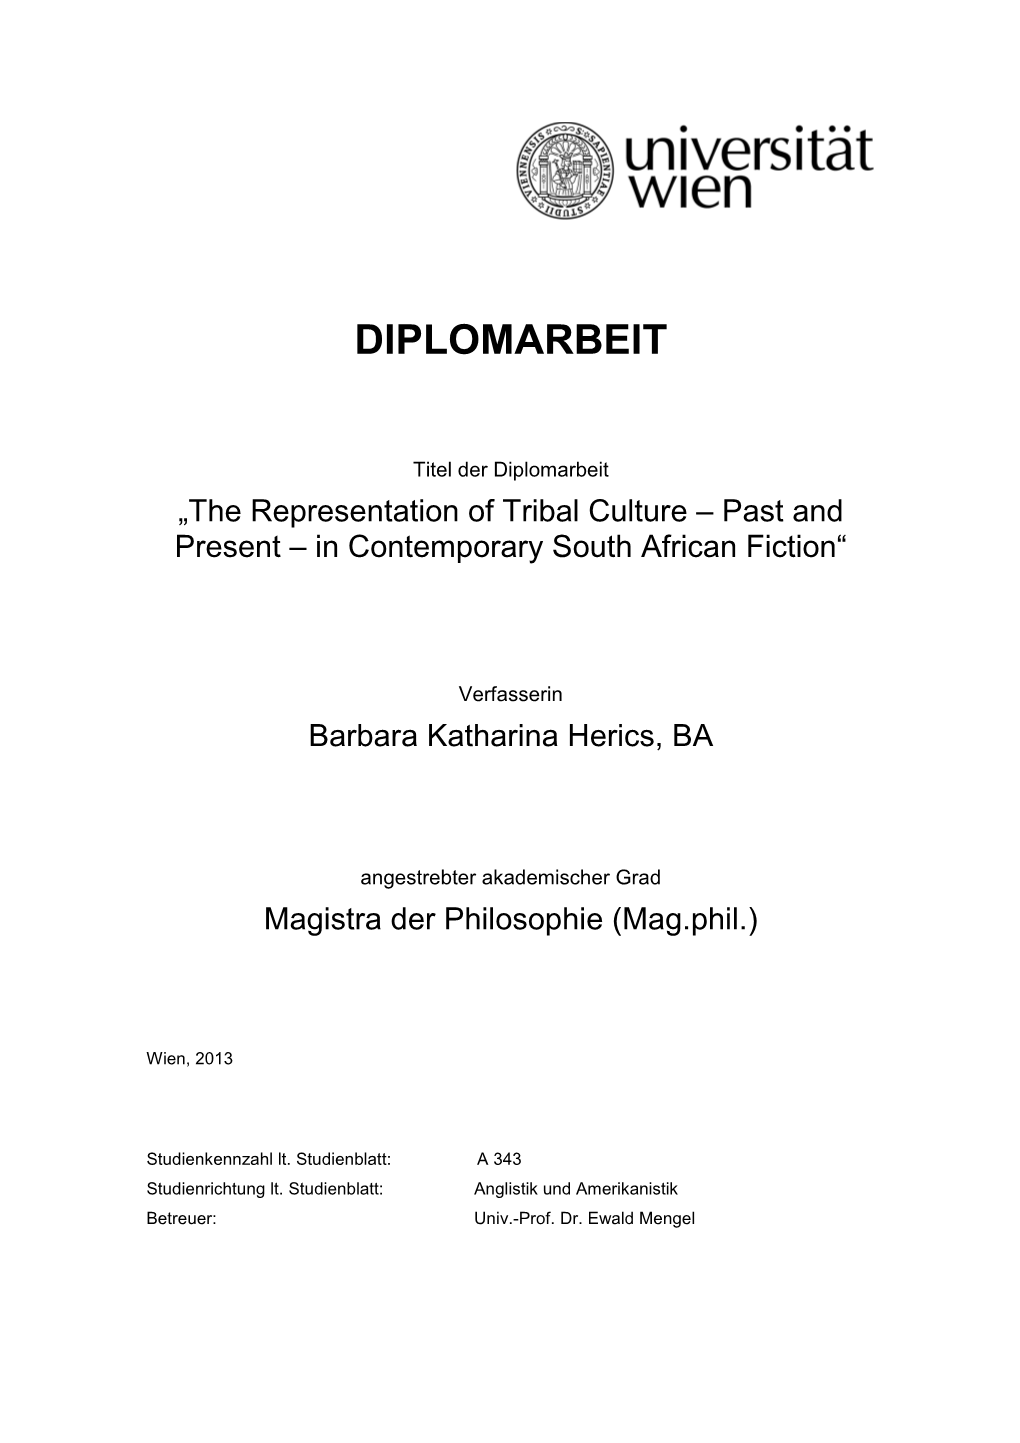 Diploma Thesis Herics Barbara